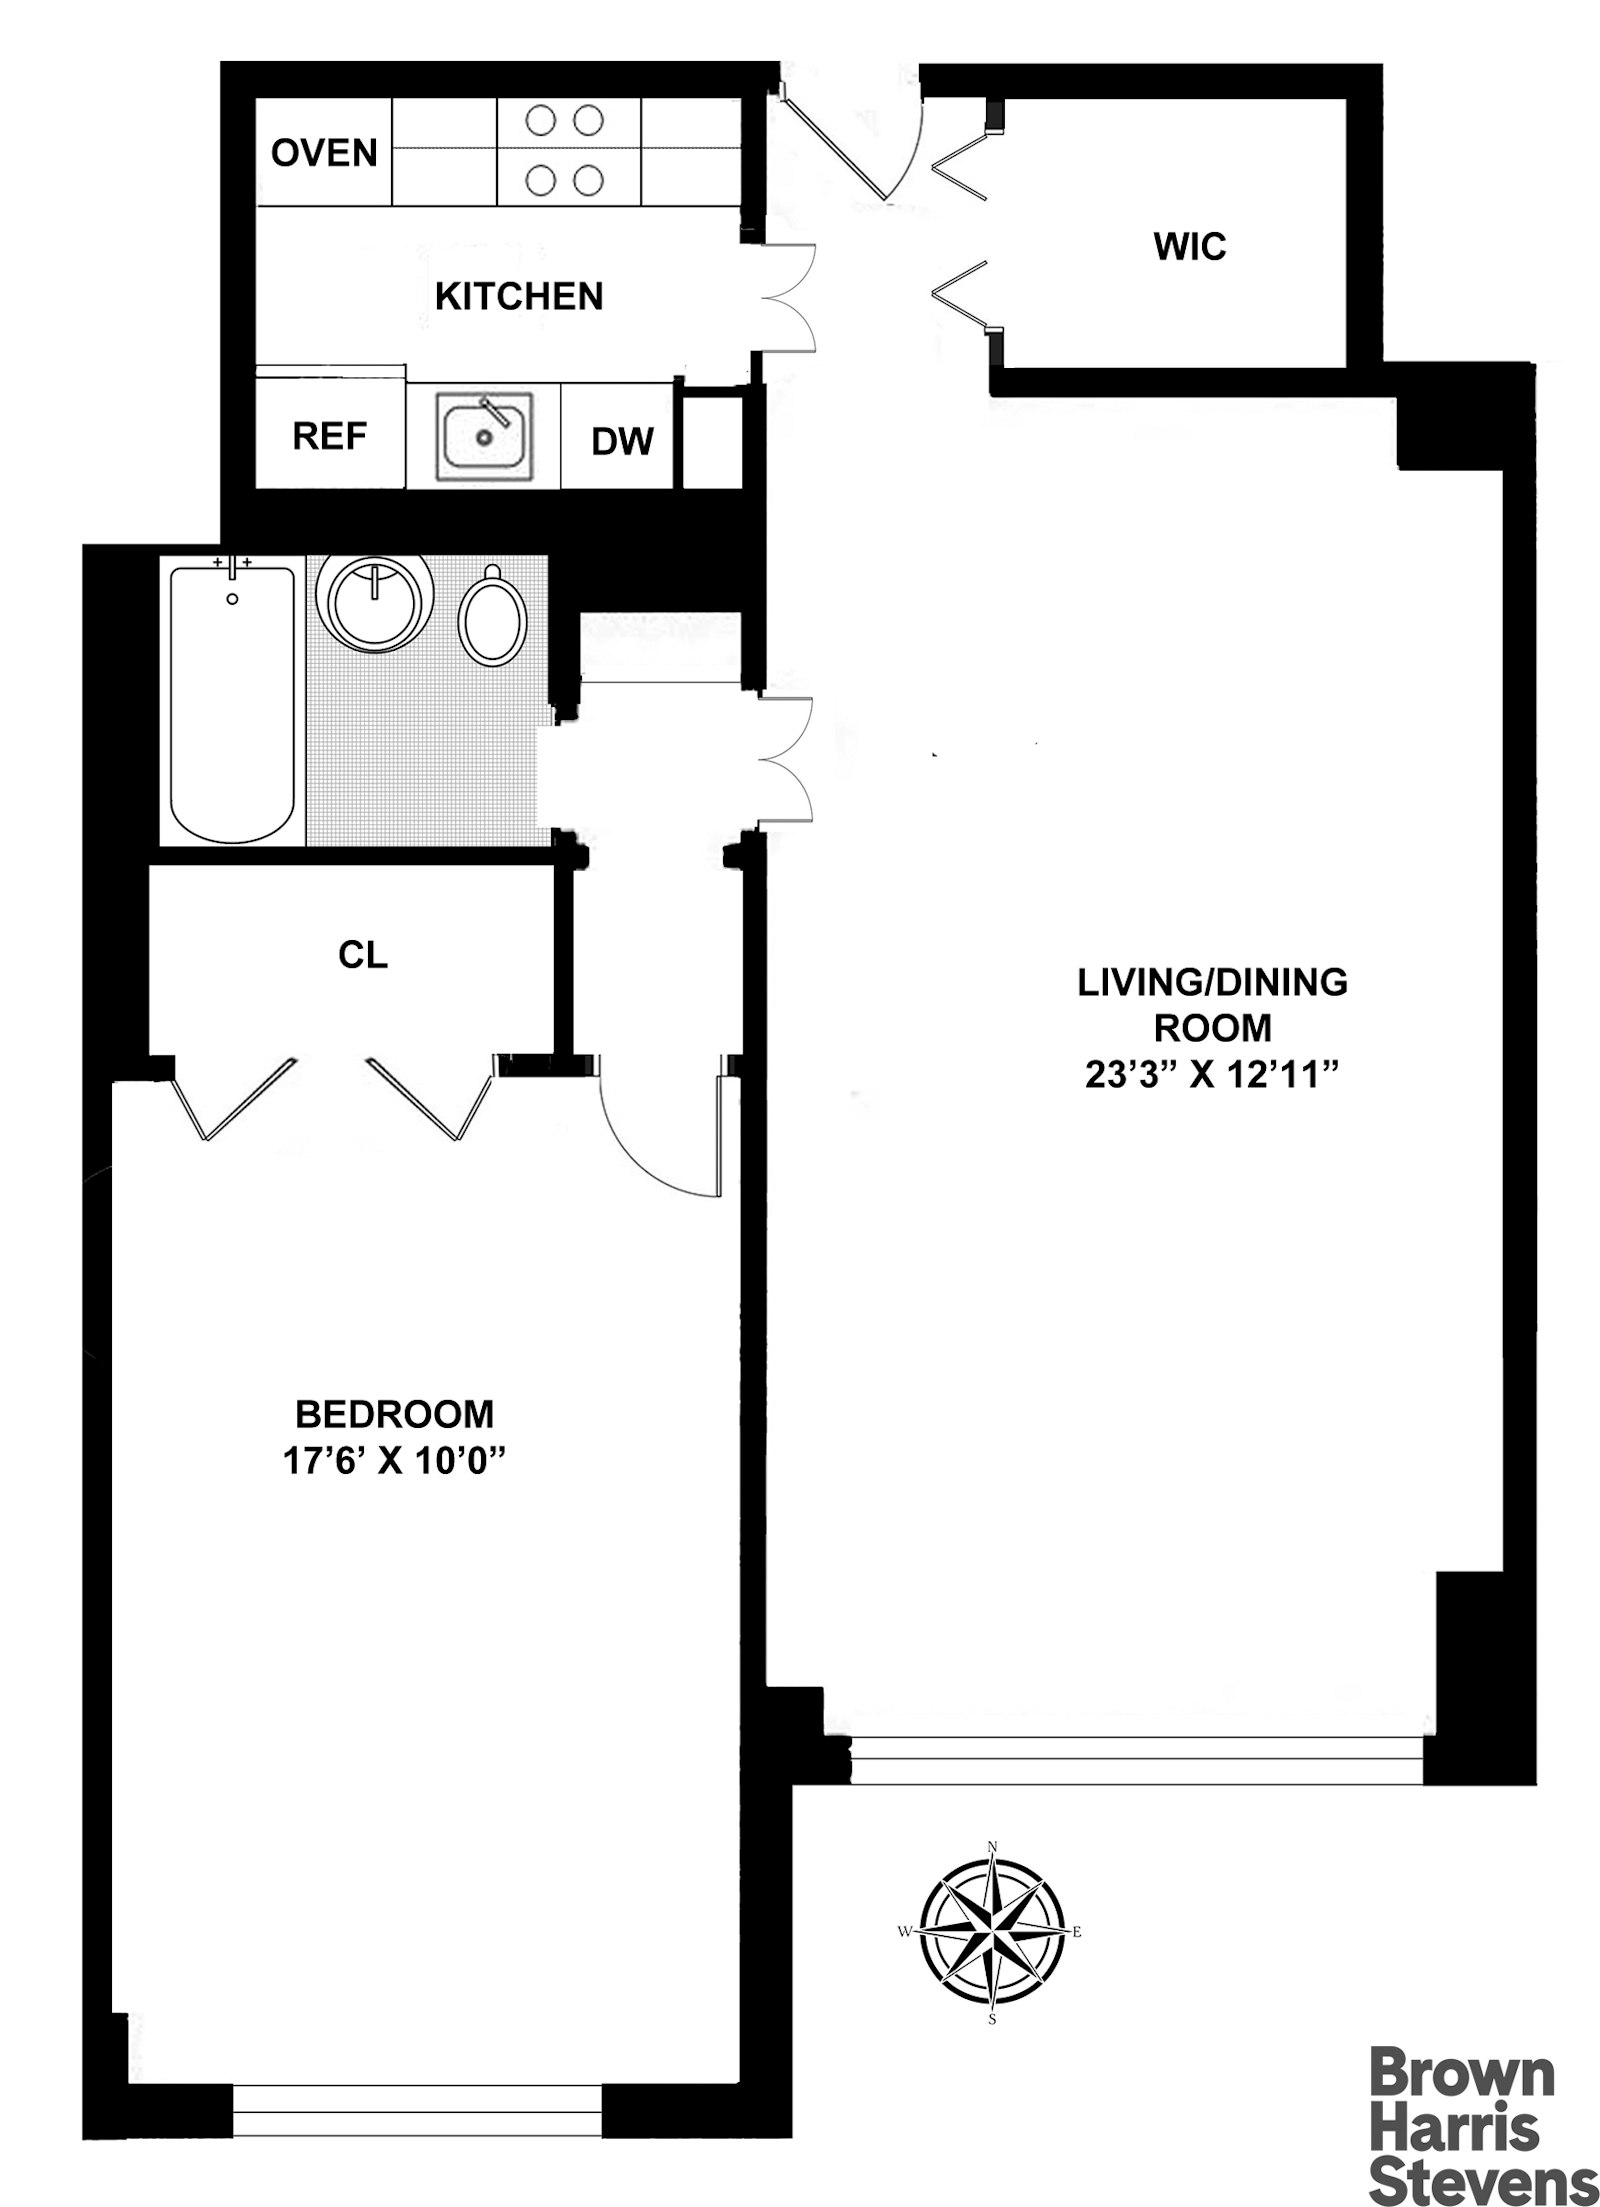 Floorplan for 145 East 84th Street, 4B